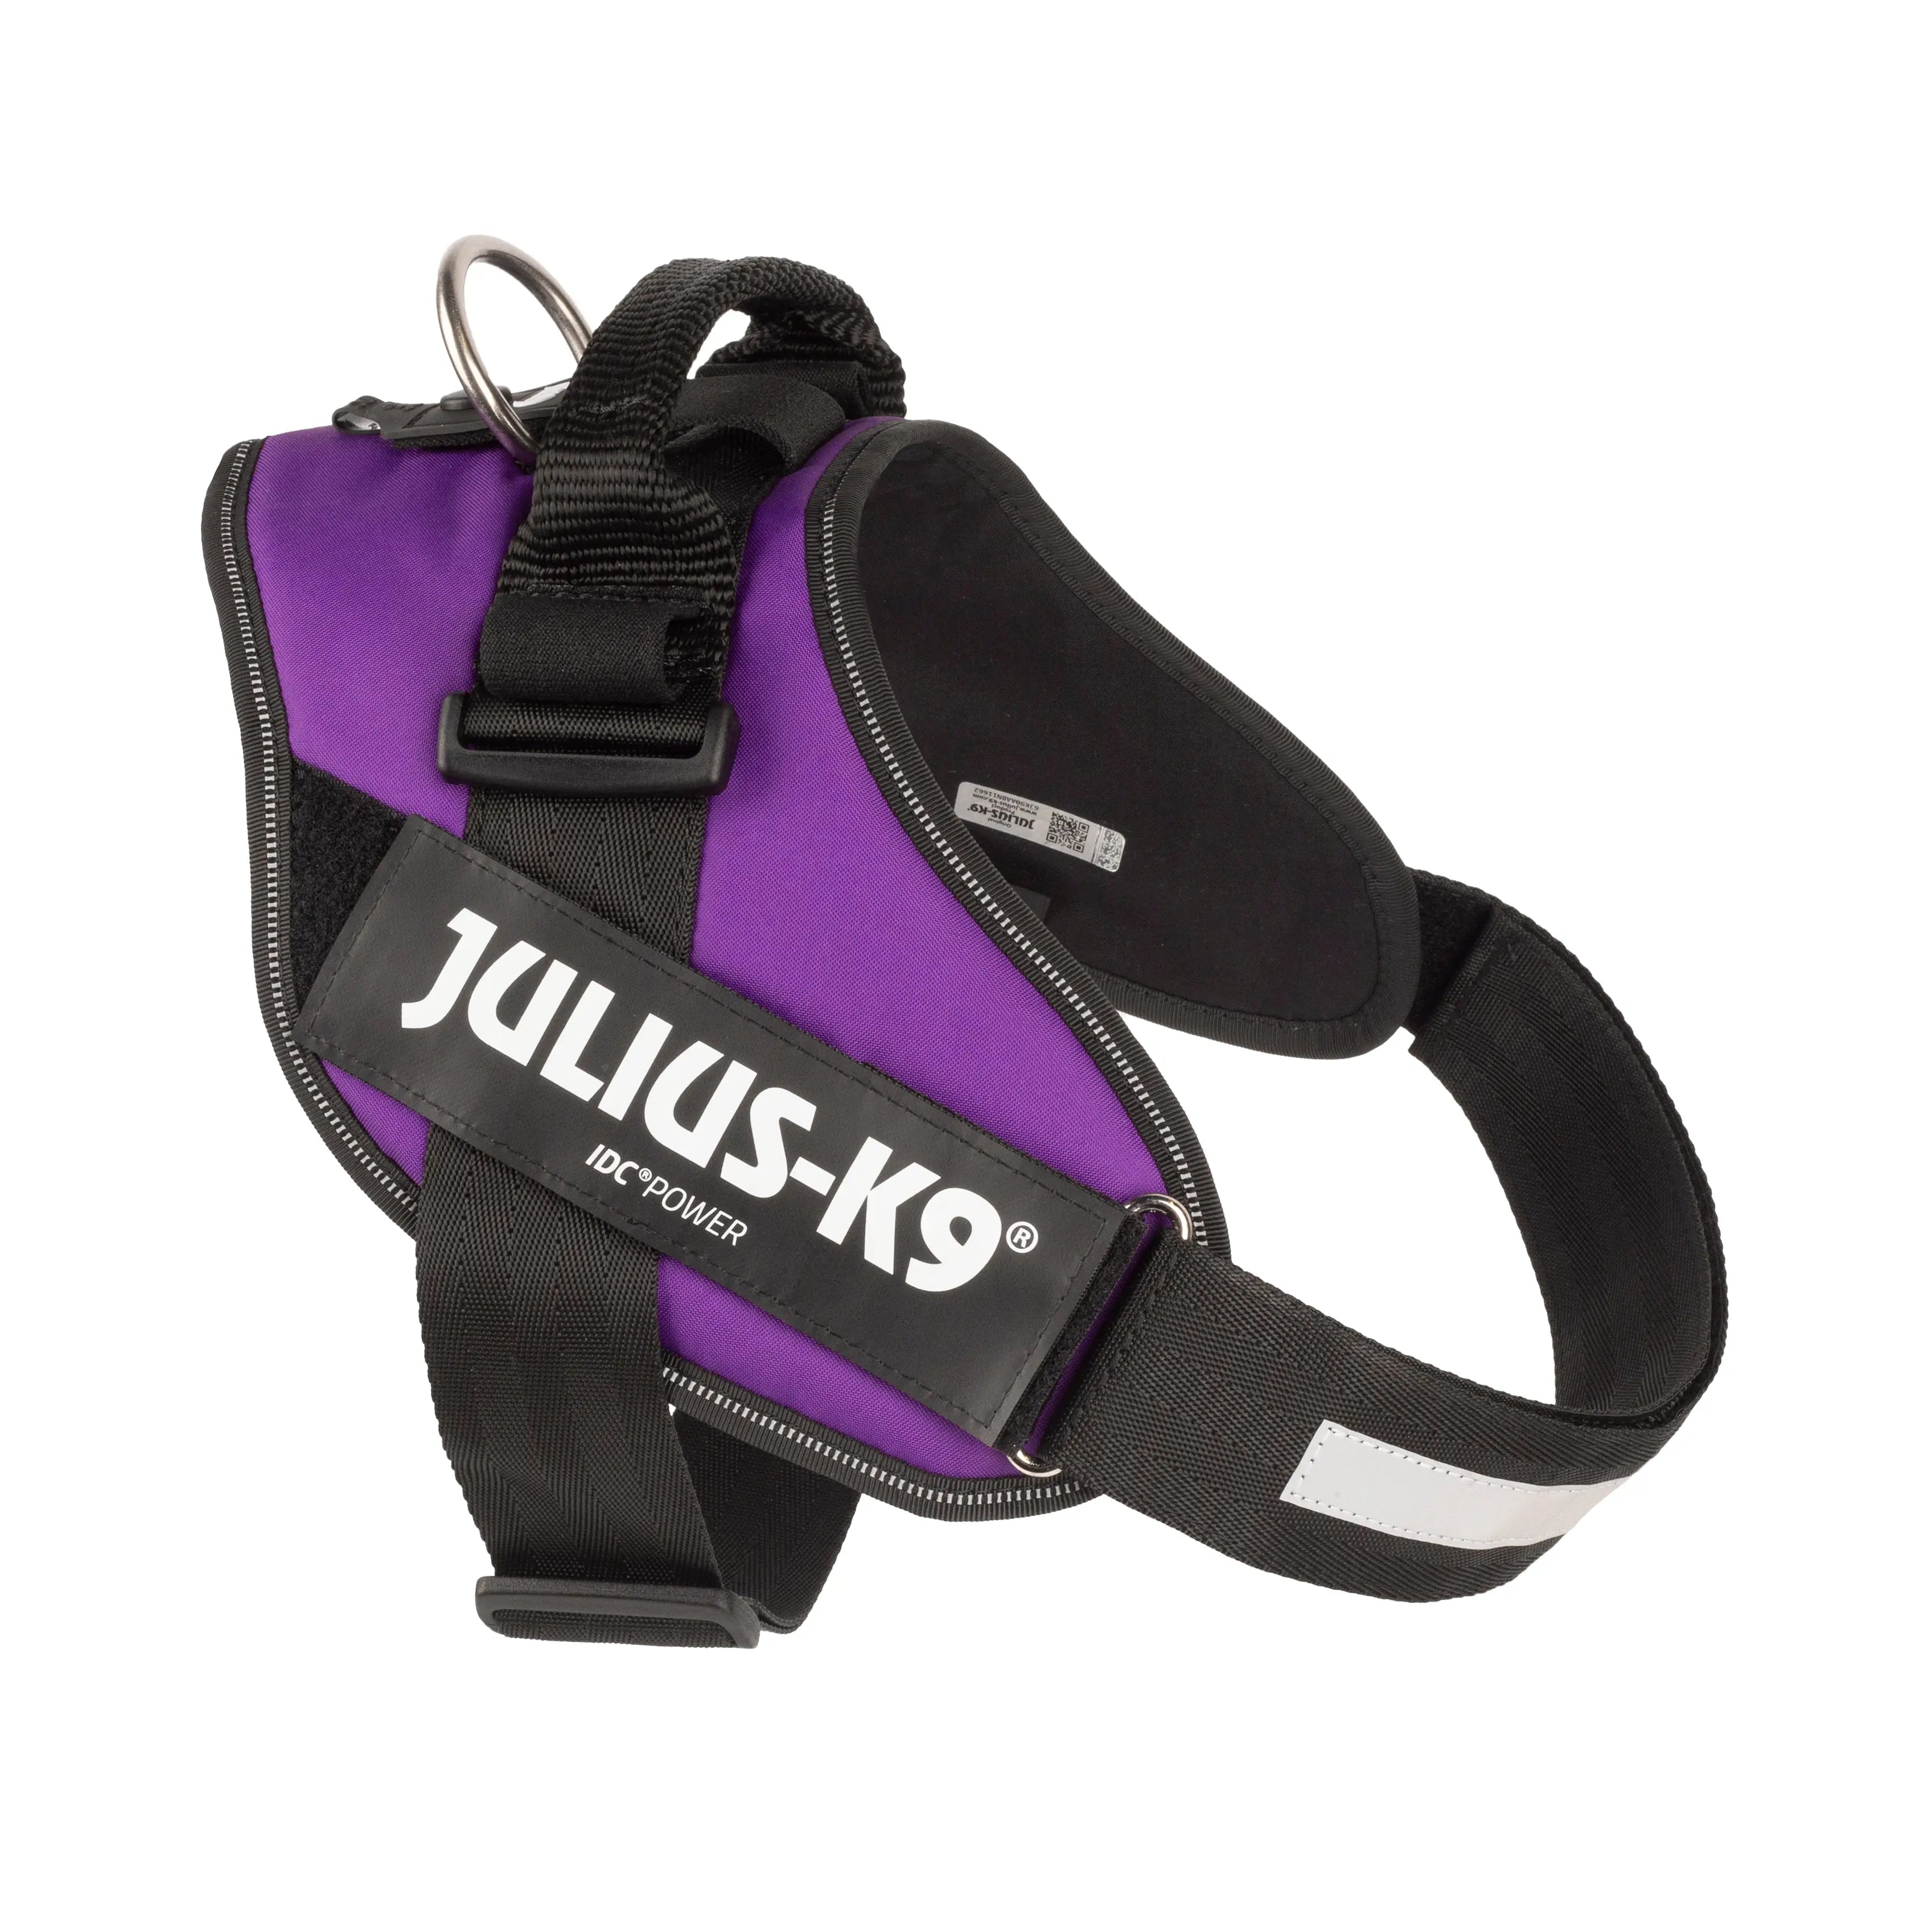 Julius-K9 Powerharness Dog Harness Fuchsia M/0